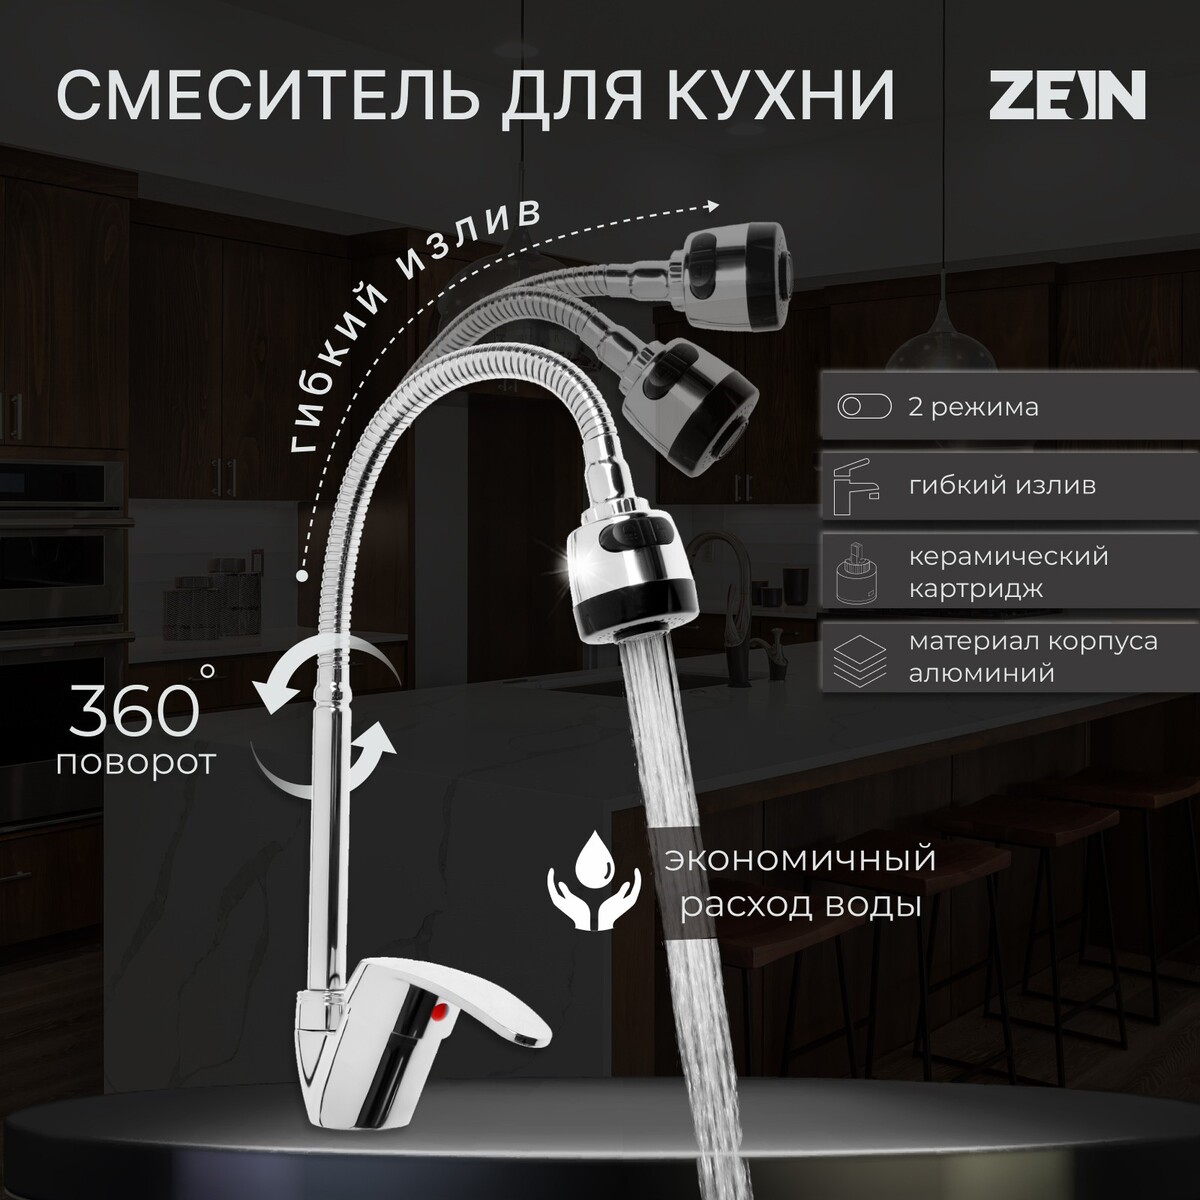 Смеситель для кухни zein z3043, гибкий излив, картридж 40 мм, без подводки, хром